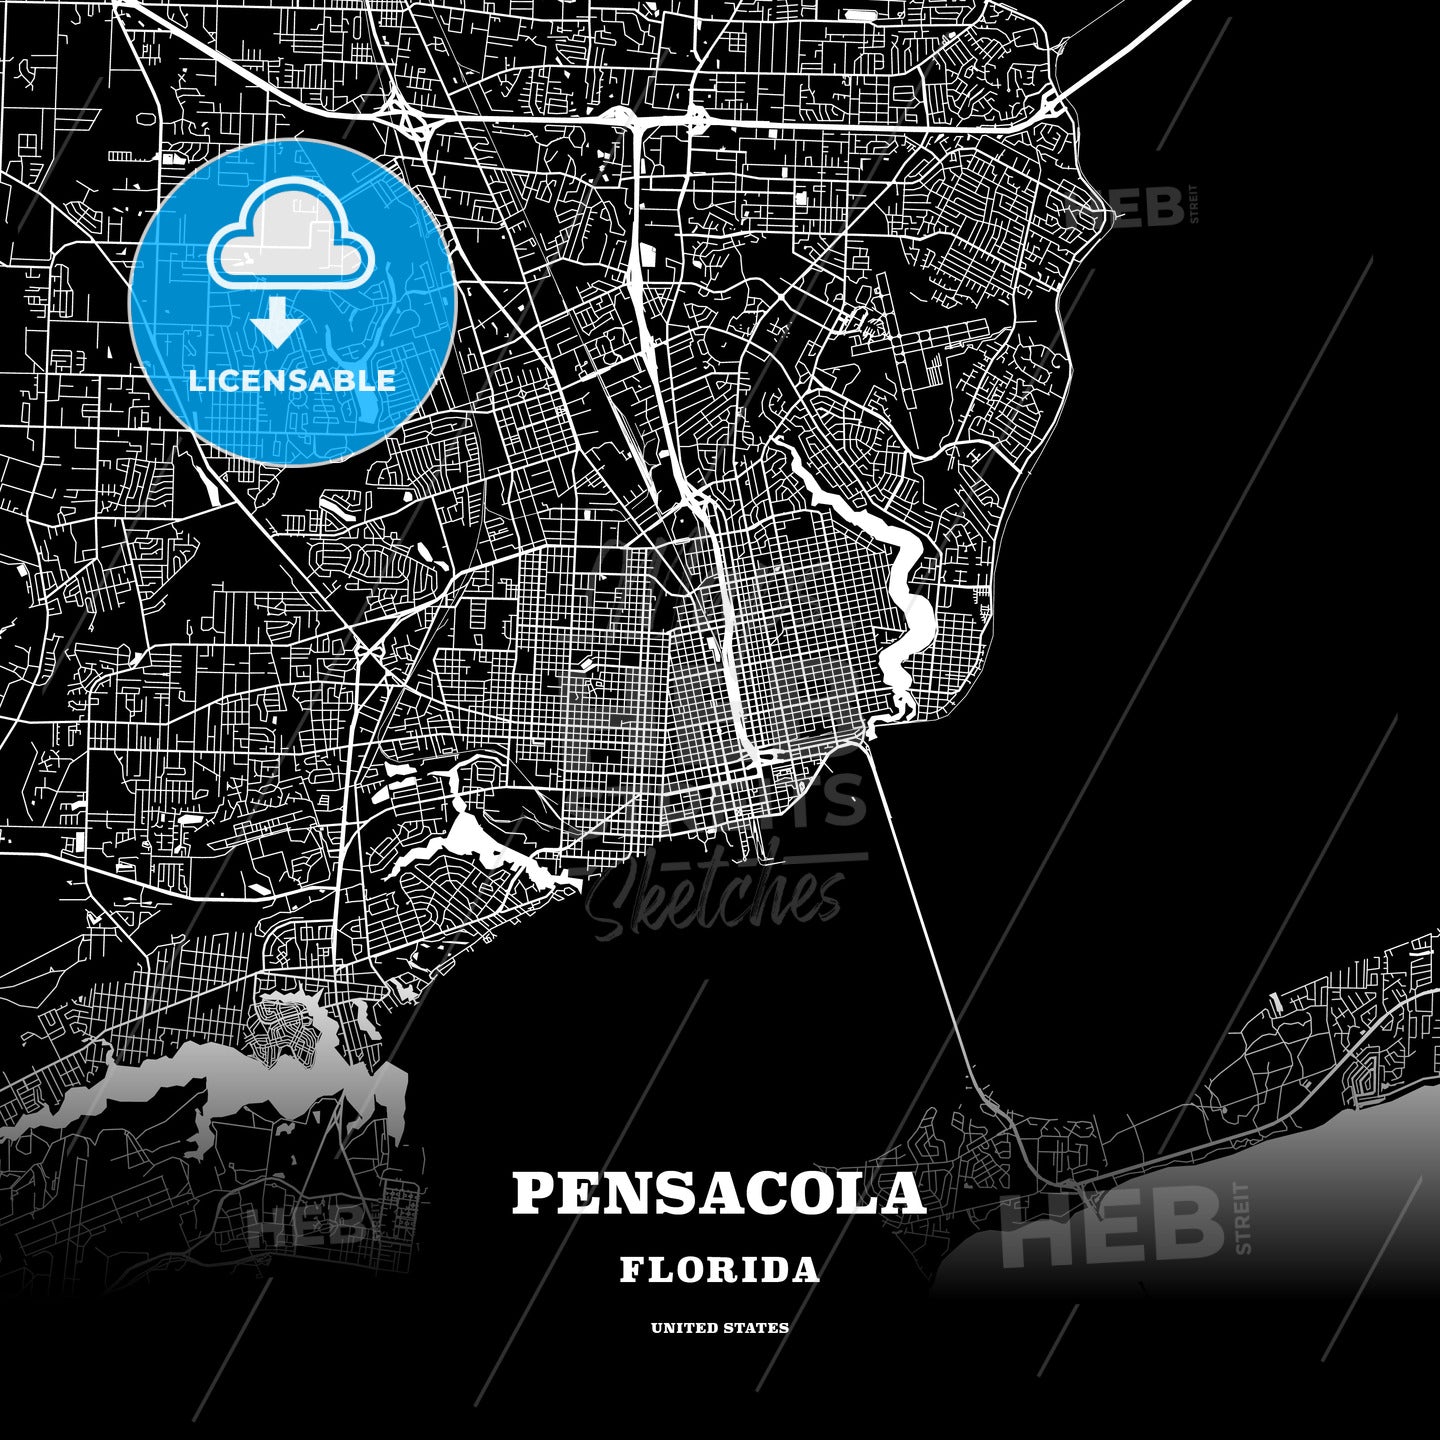 Pensacola, Florida, USA map